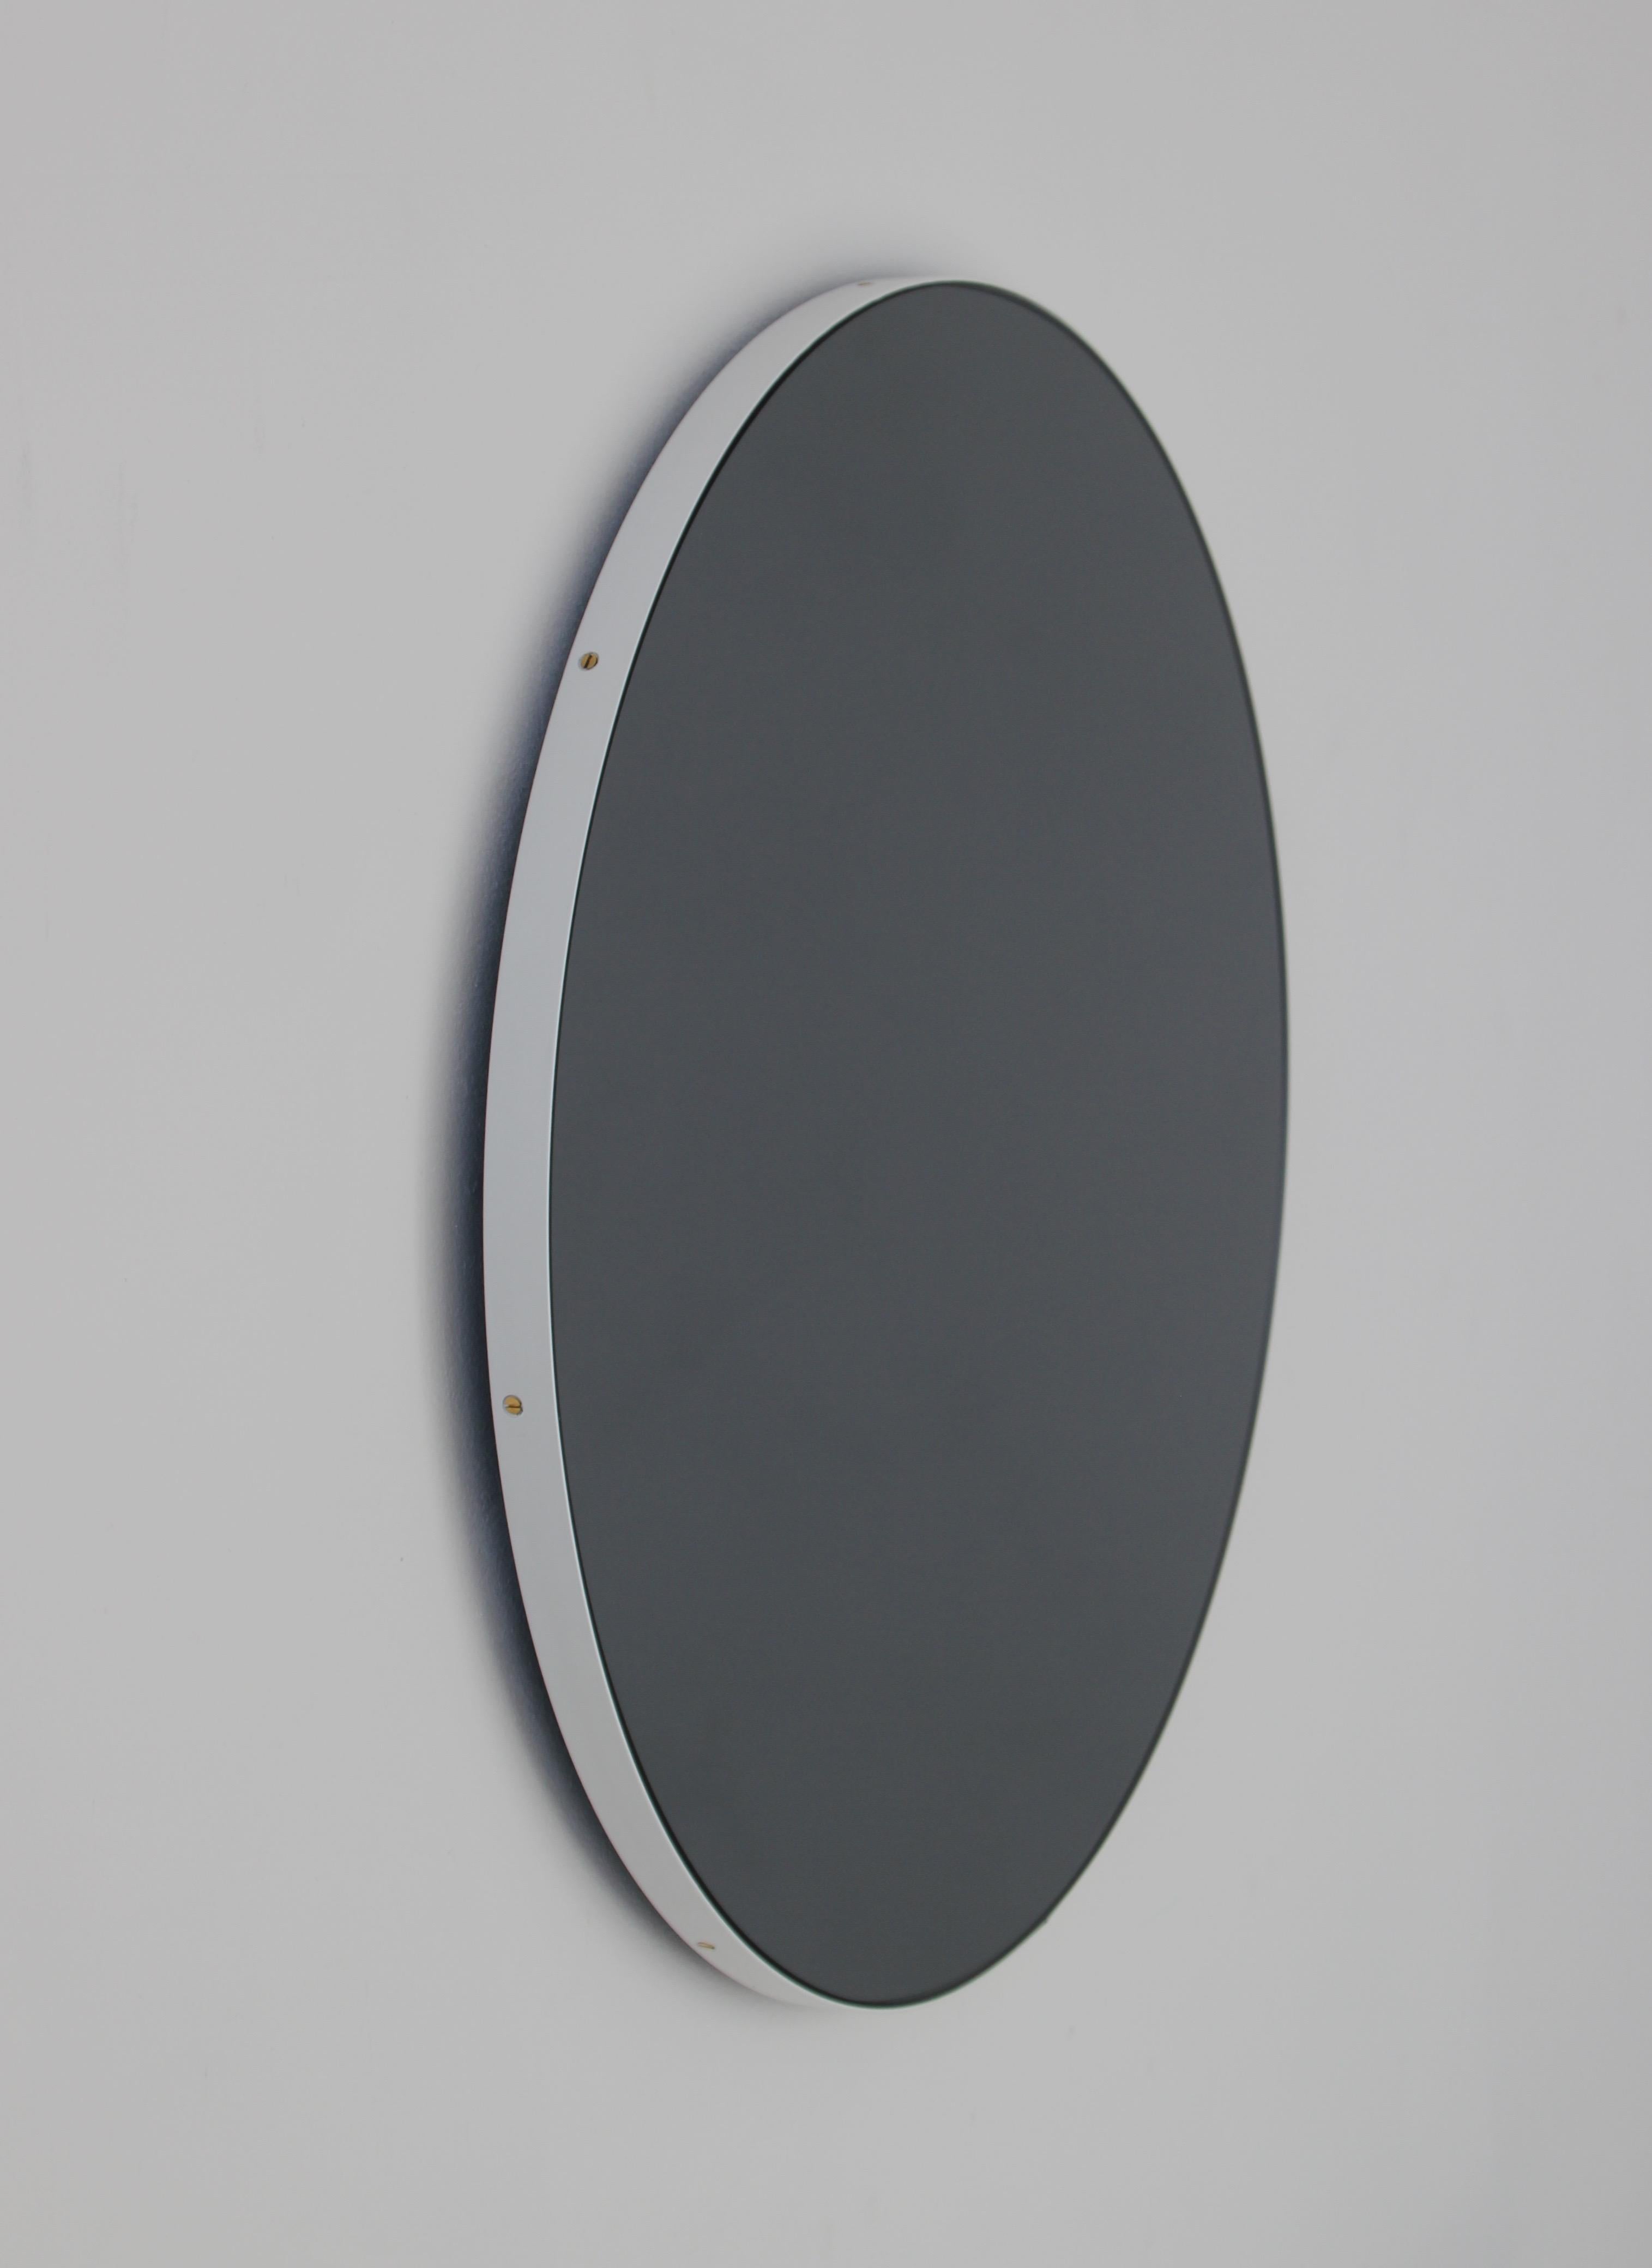 Blackened Orbis Black Tinted Modern Round Mirror with White Frame - Regular